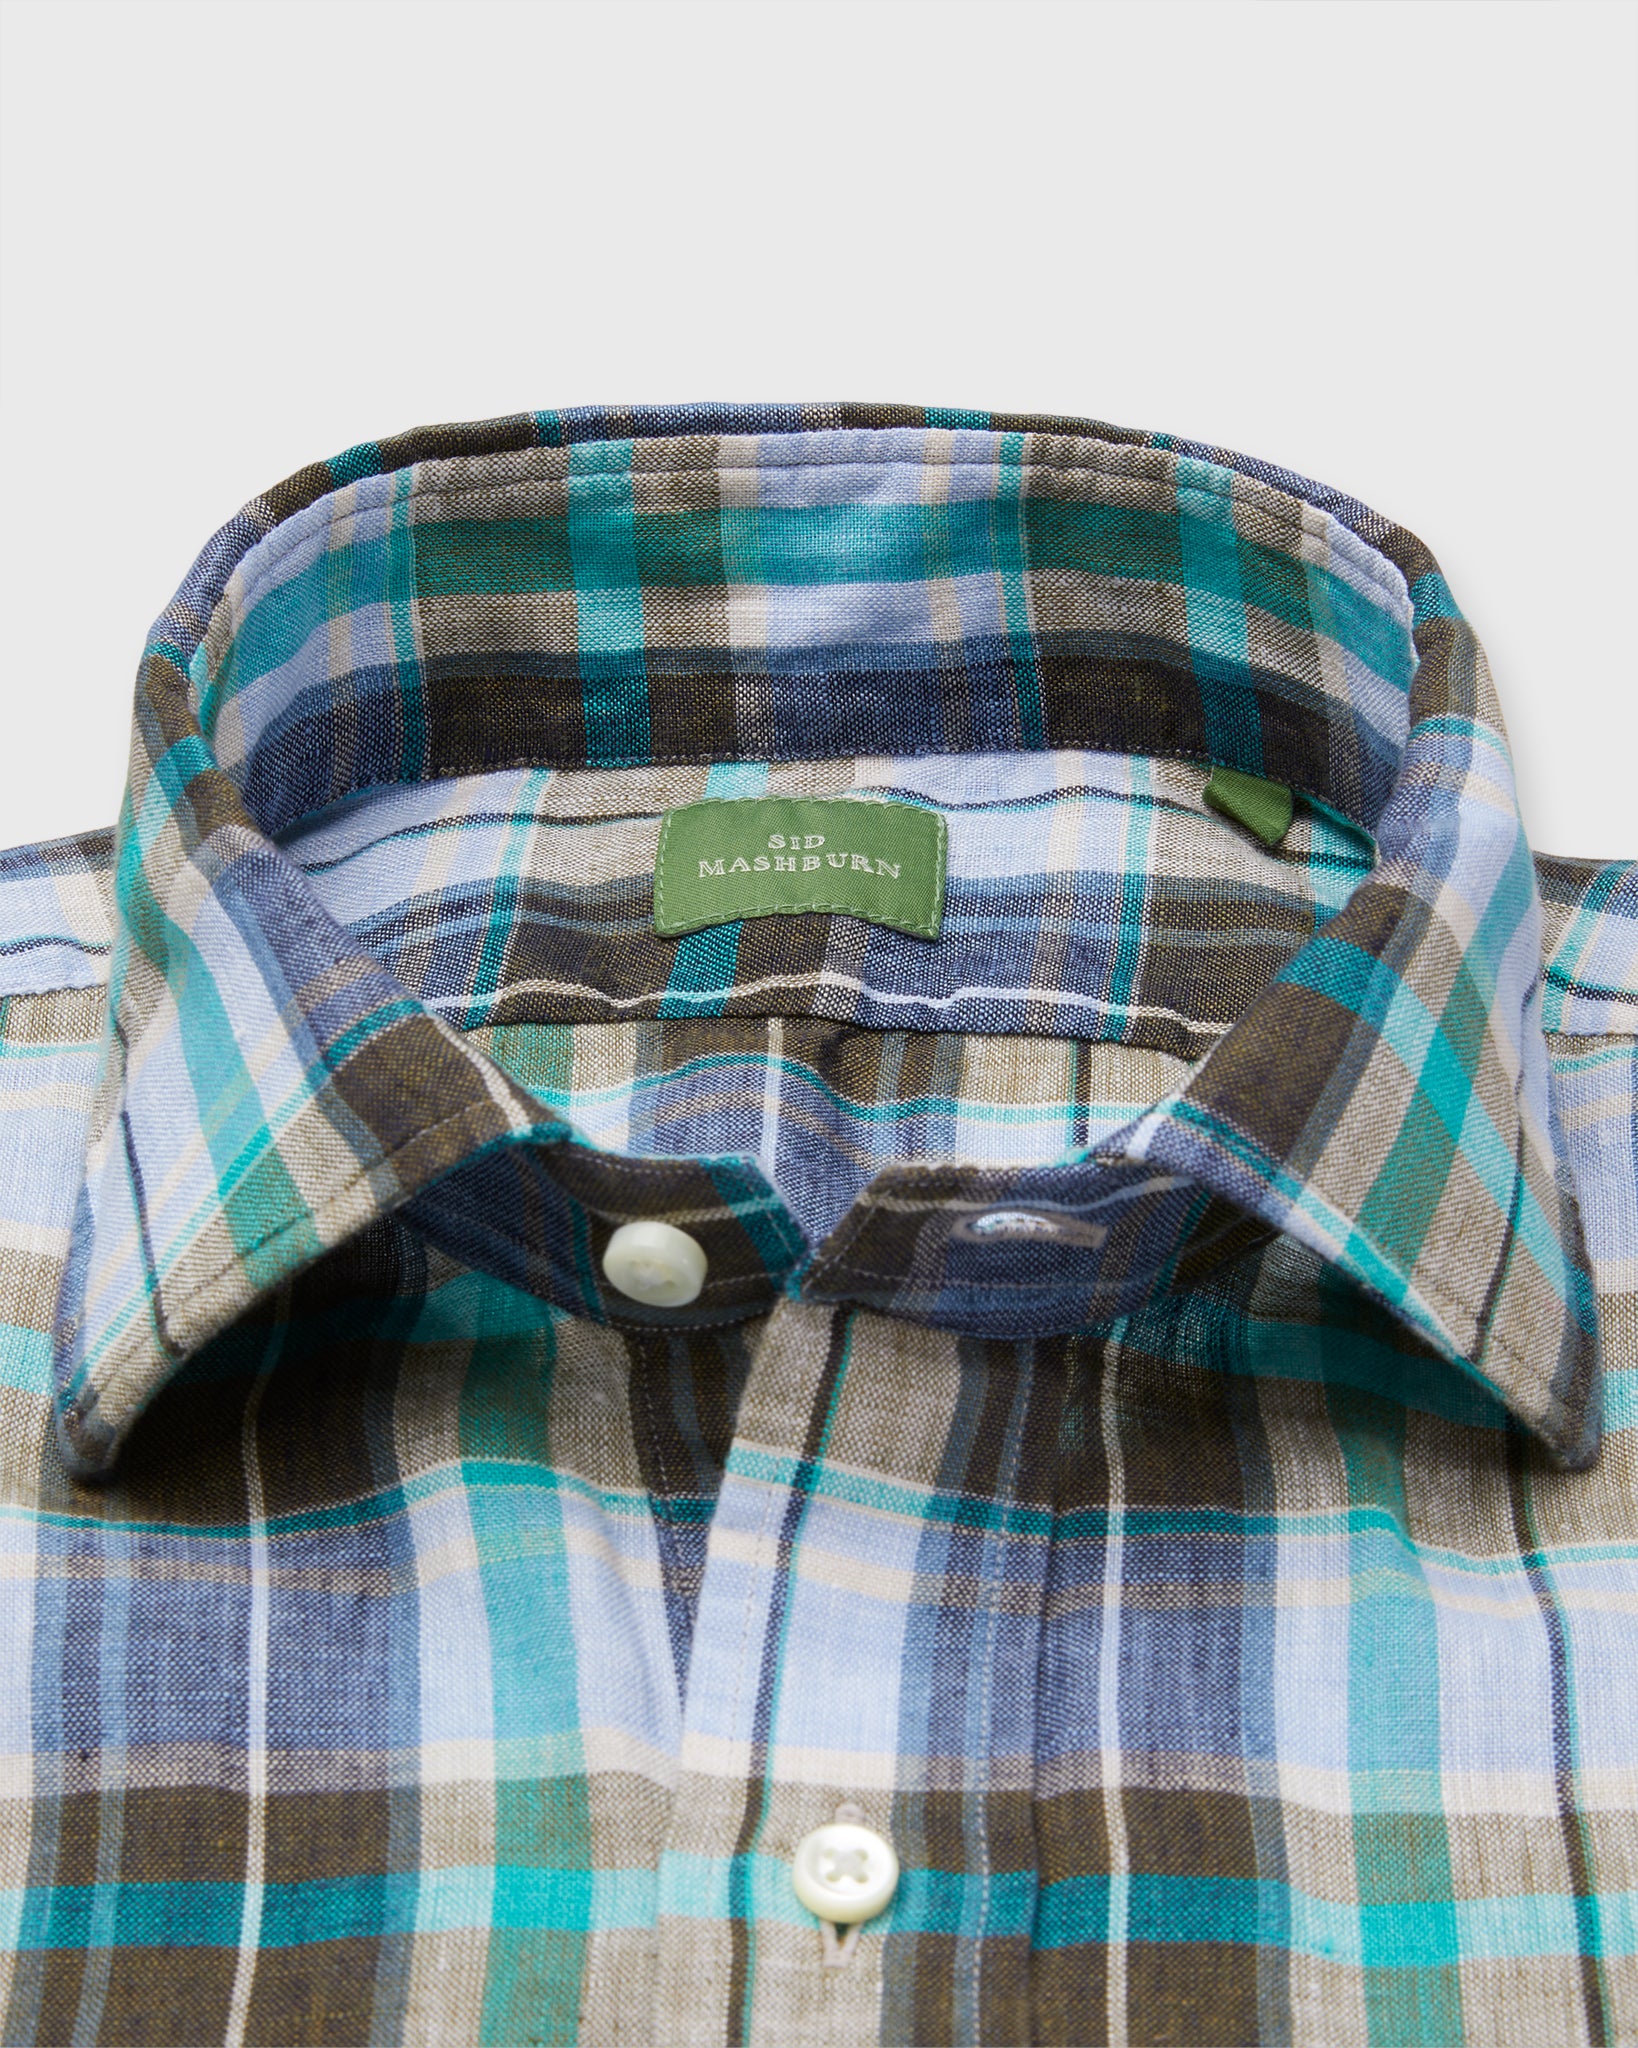 Spread Collar Popover Sport Shirt in Peri/Brolive/Surf Plaid Linen